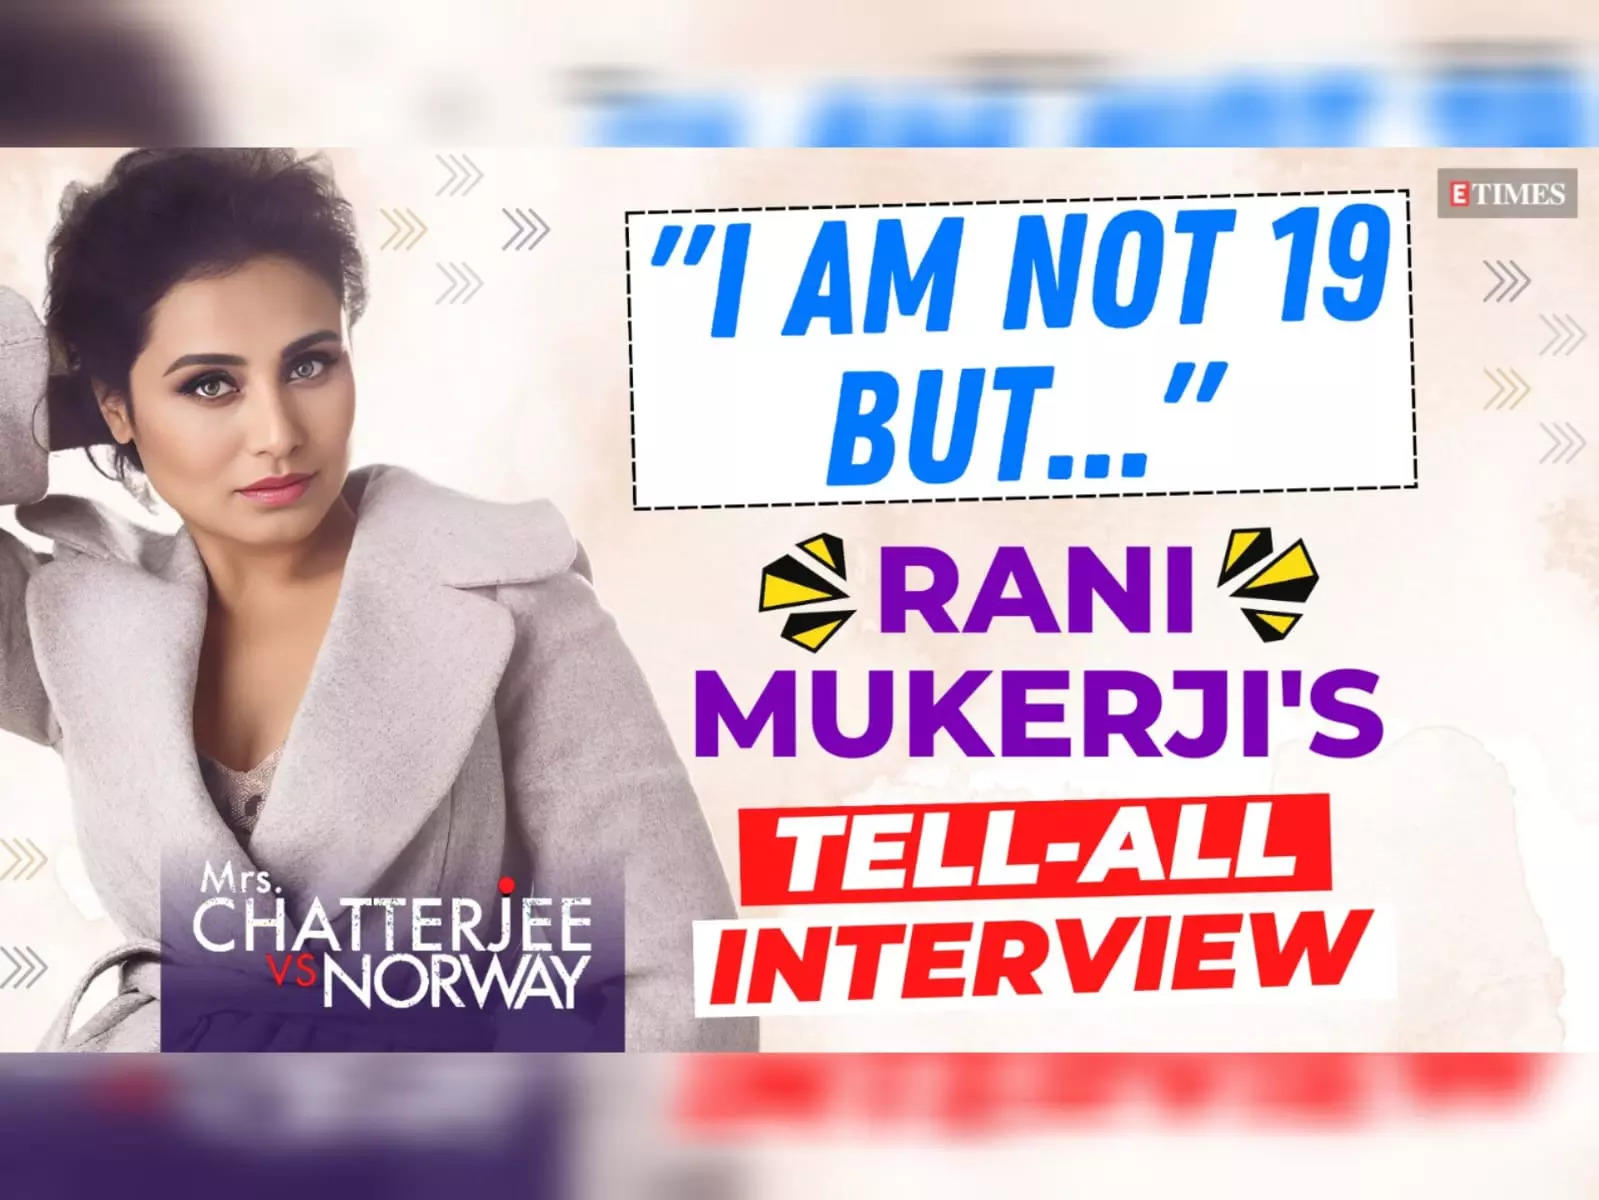 Rani Mukerji: "I am not 19 but..." - Excl